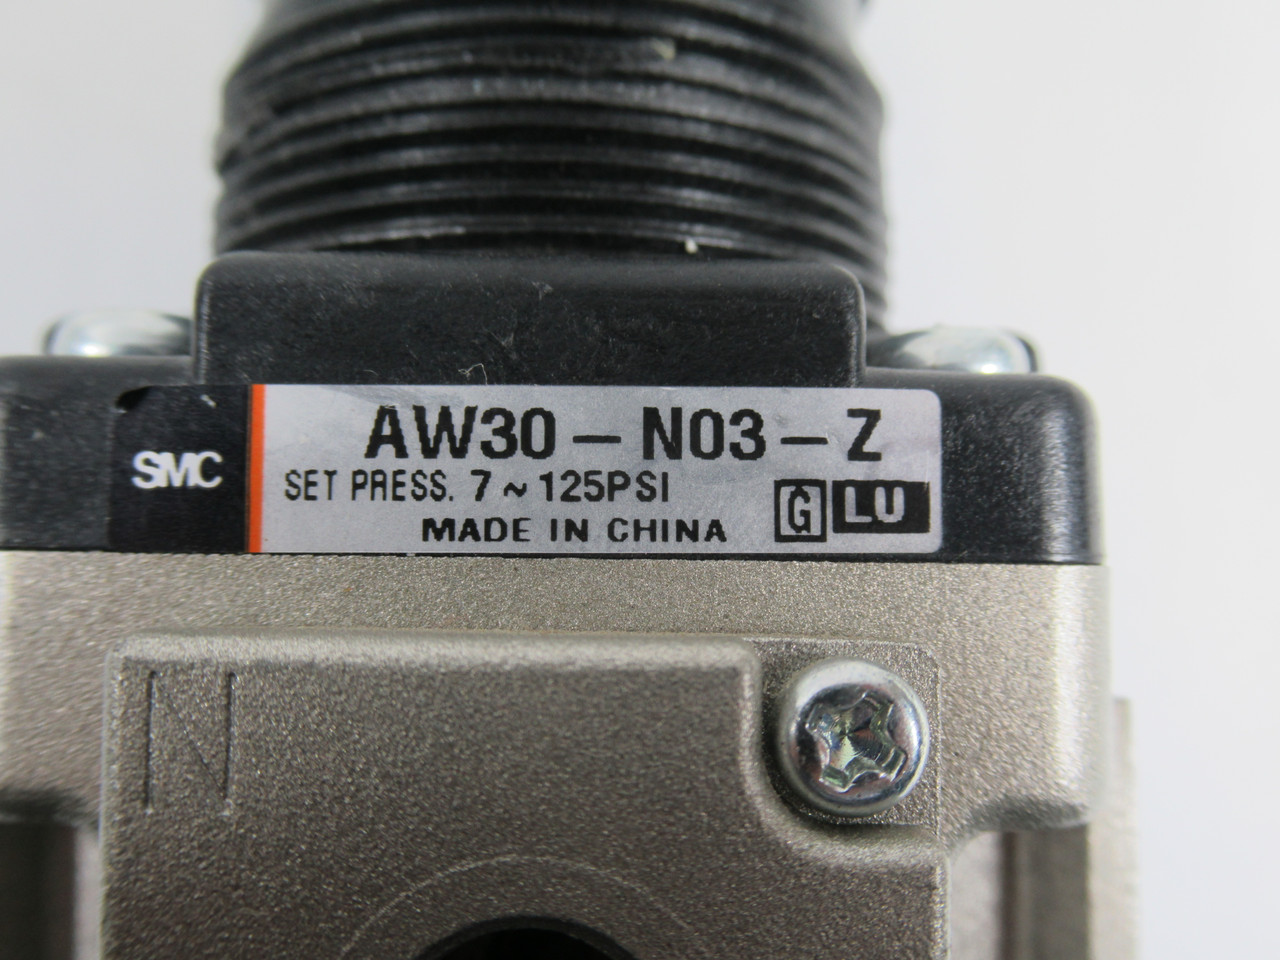 SMC AW30-N03-Z Filter Regulator Set Press 7-125 psi 3/8" NPT USED